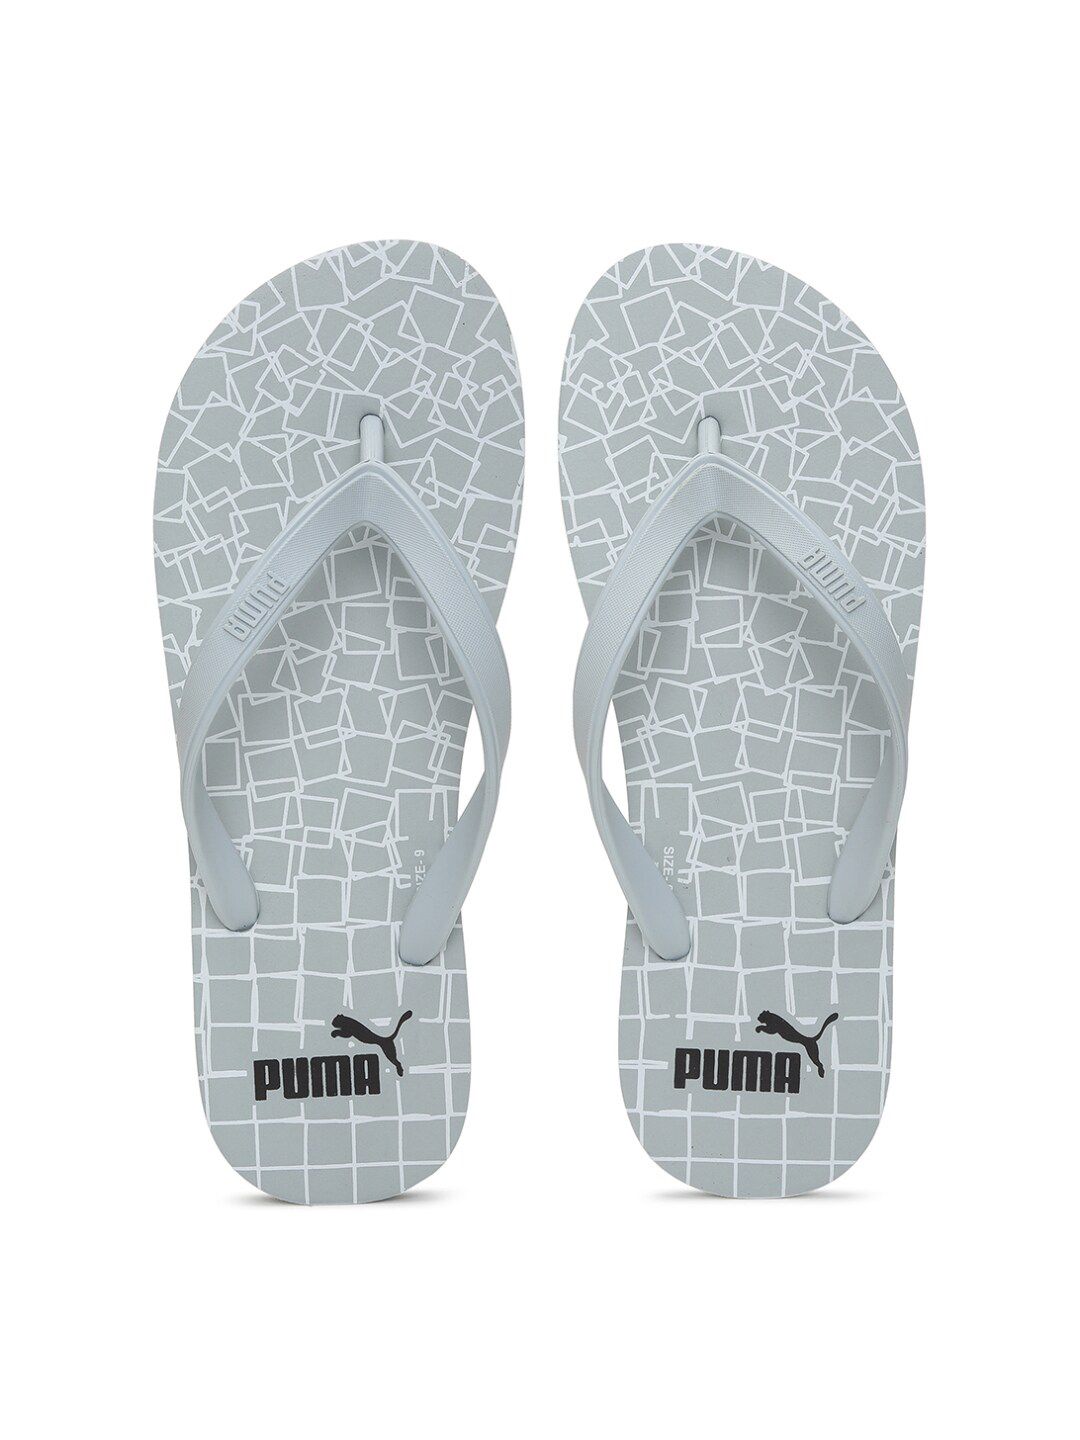 Puma Unisex Grey Printed Thong Flip-Flops Price in India